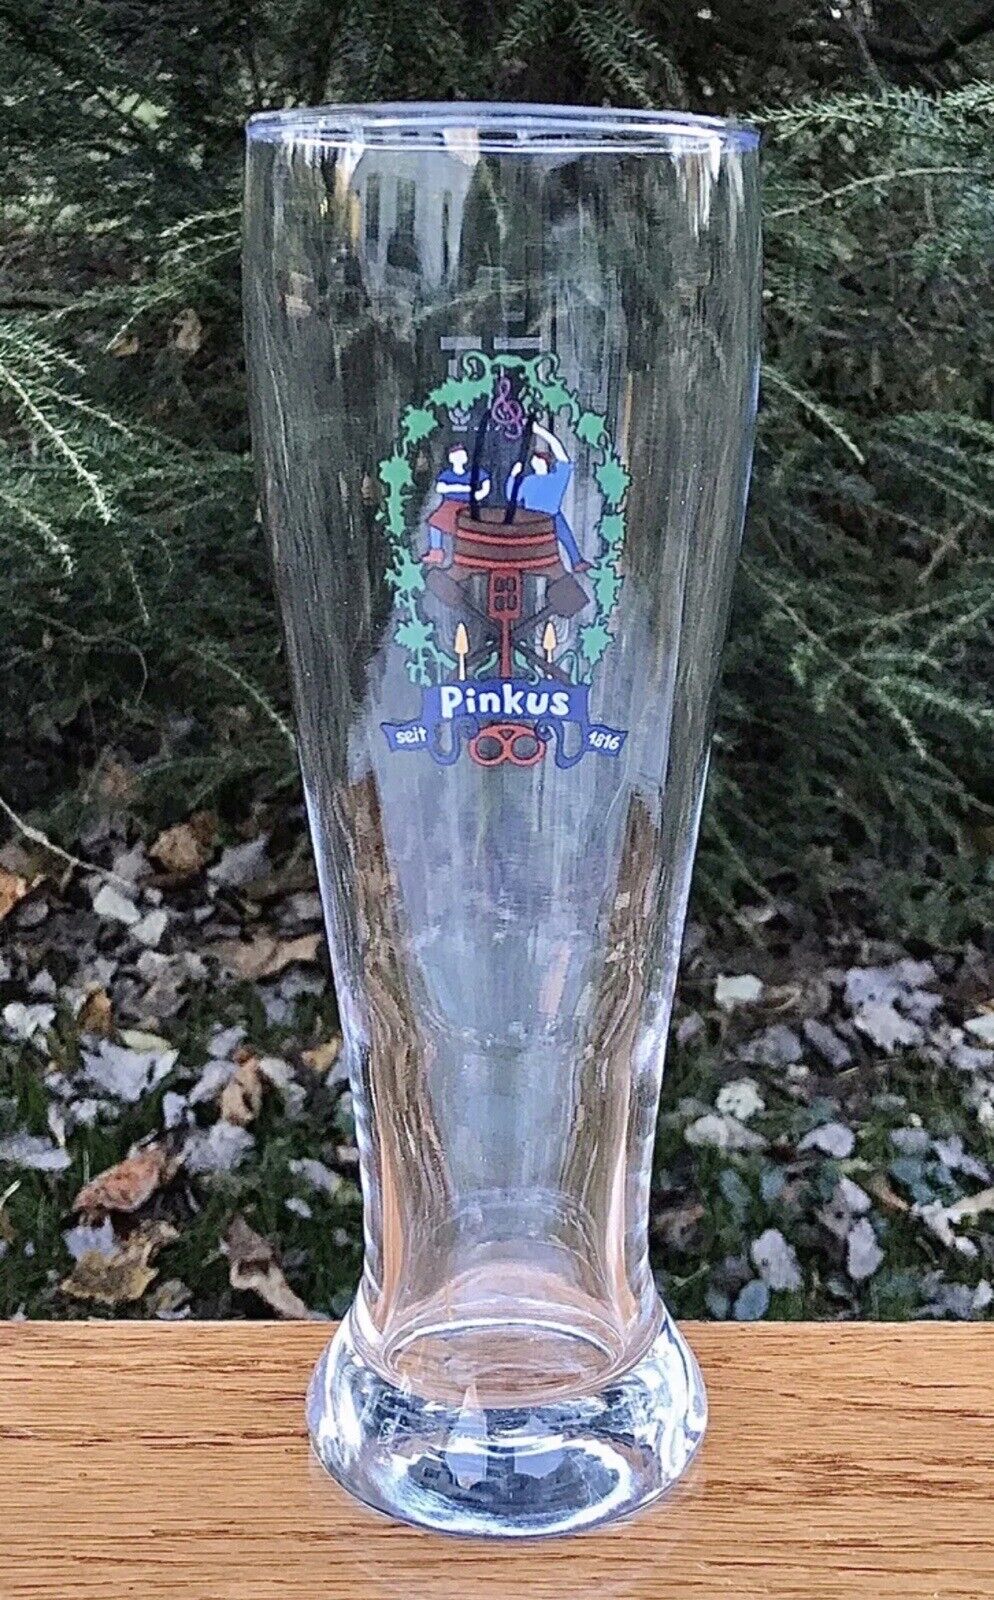 PINKUS Braverei Müller Münster 0.5L RKL (Germany) Beer Glass